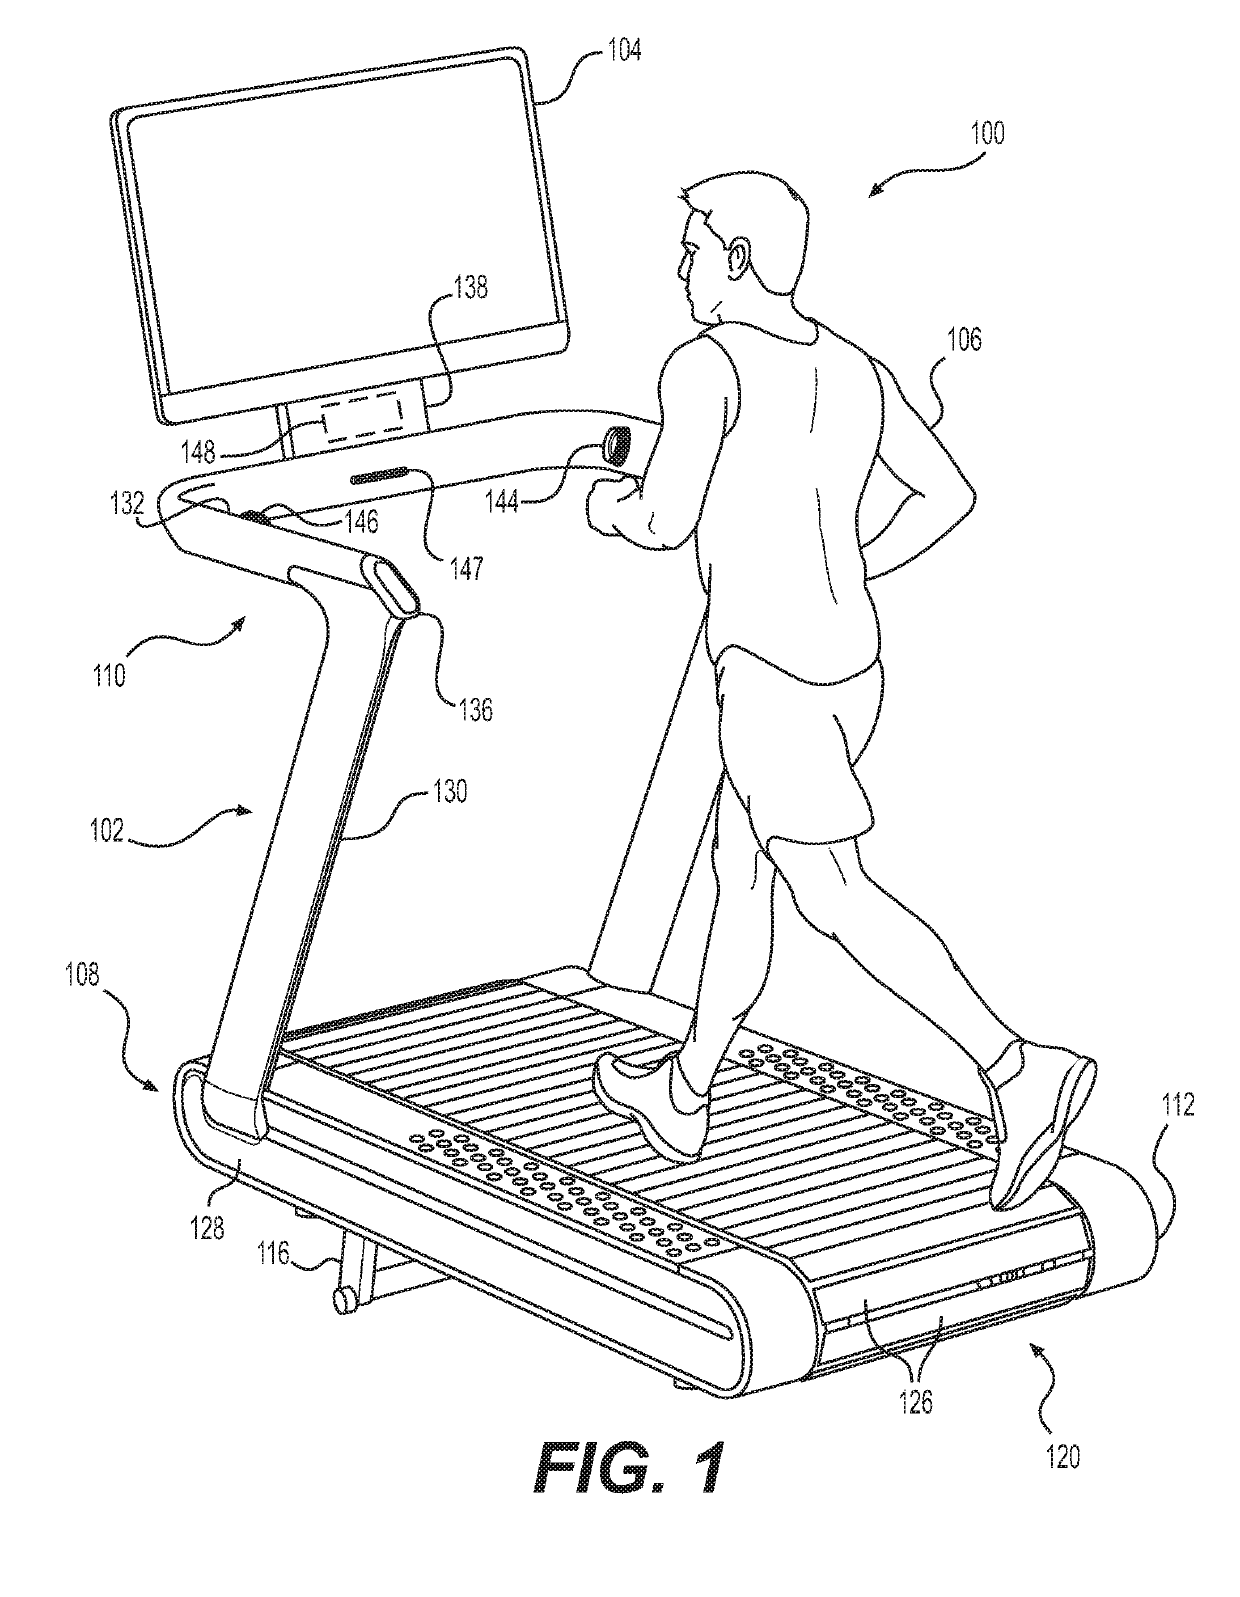 Exercise machine controls